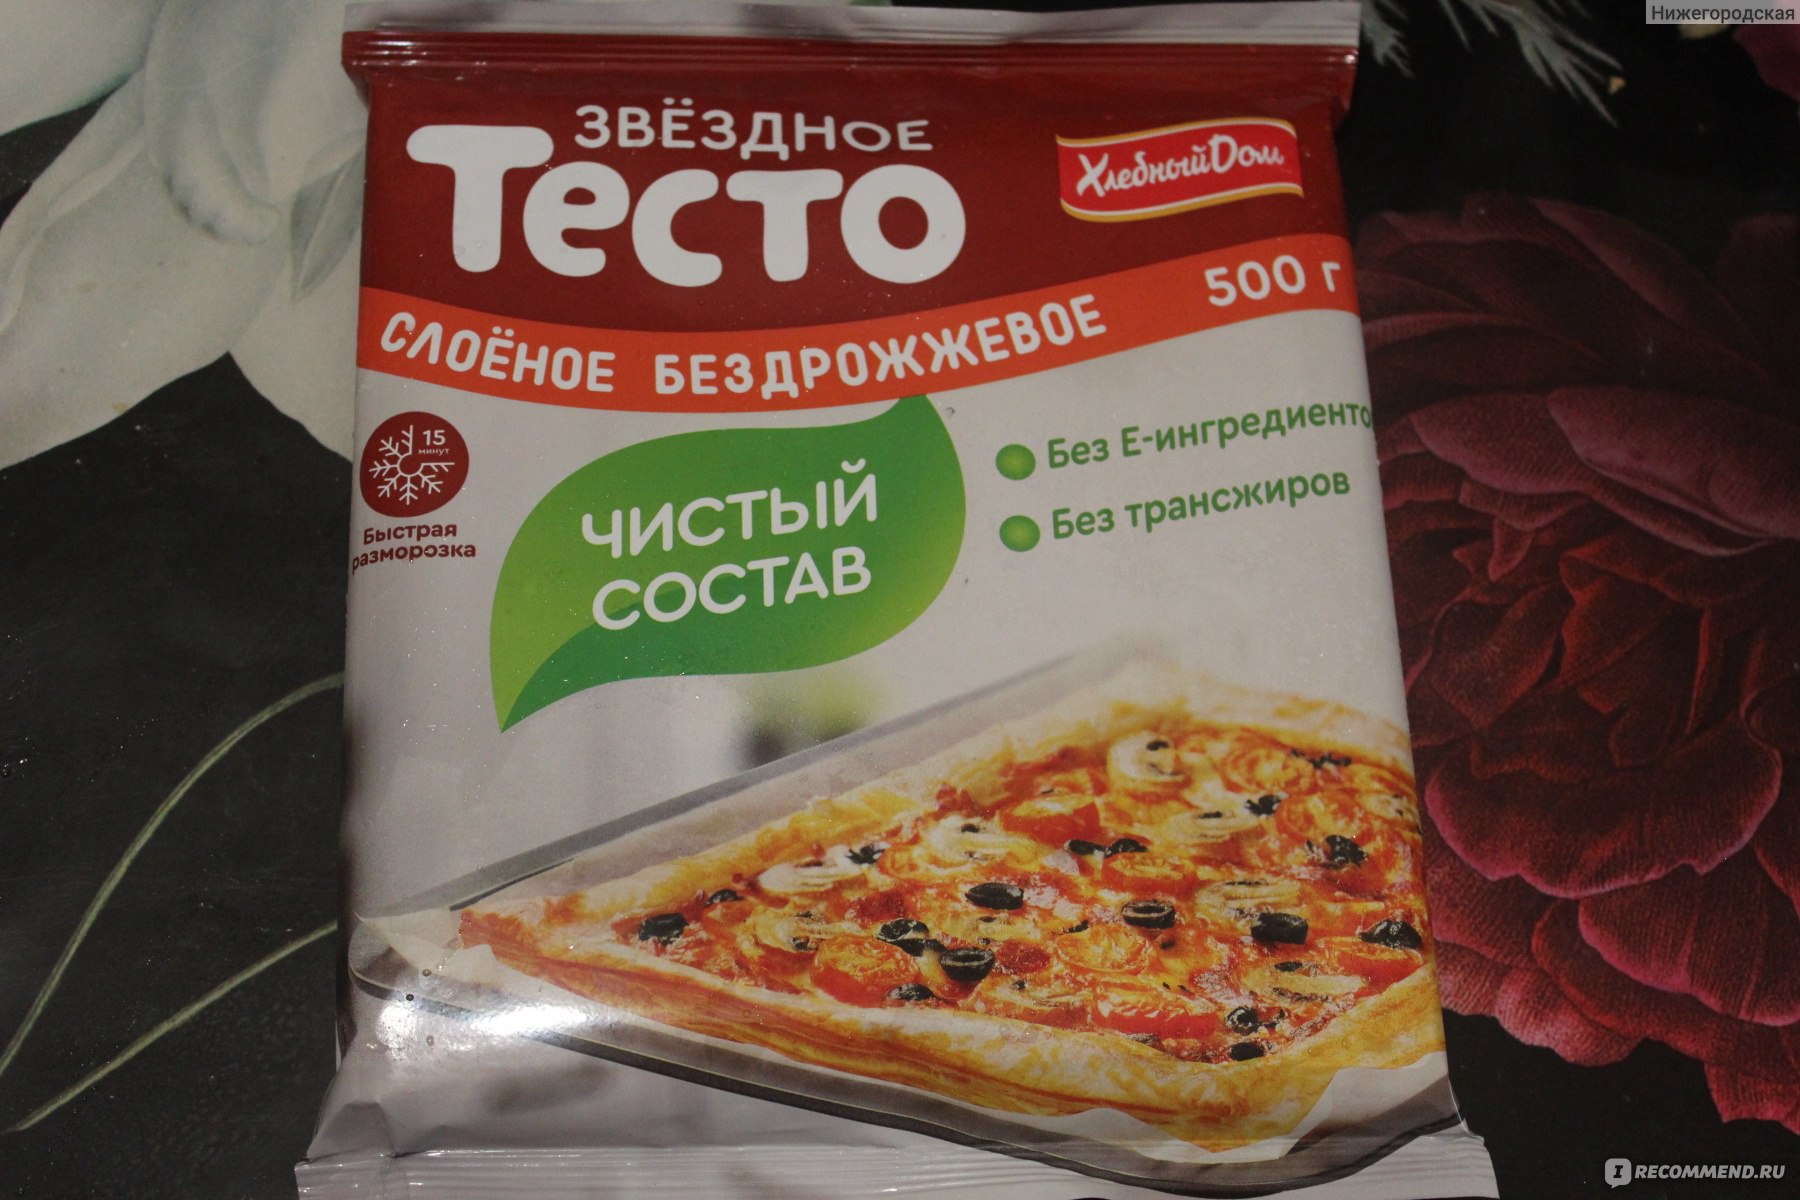 тесто бездрожжевое слоеное морозко пицца фото 116